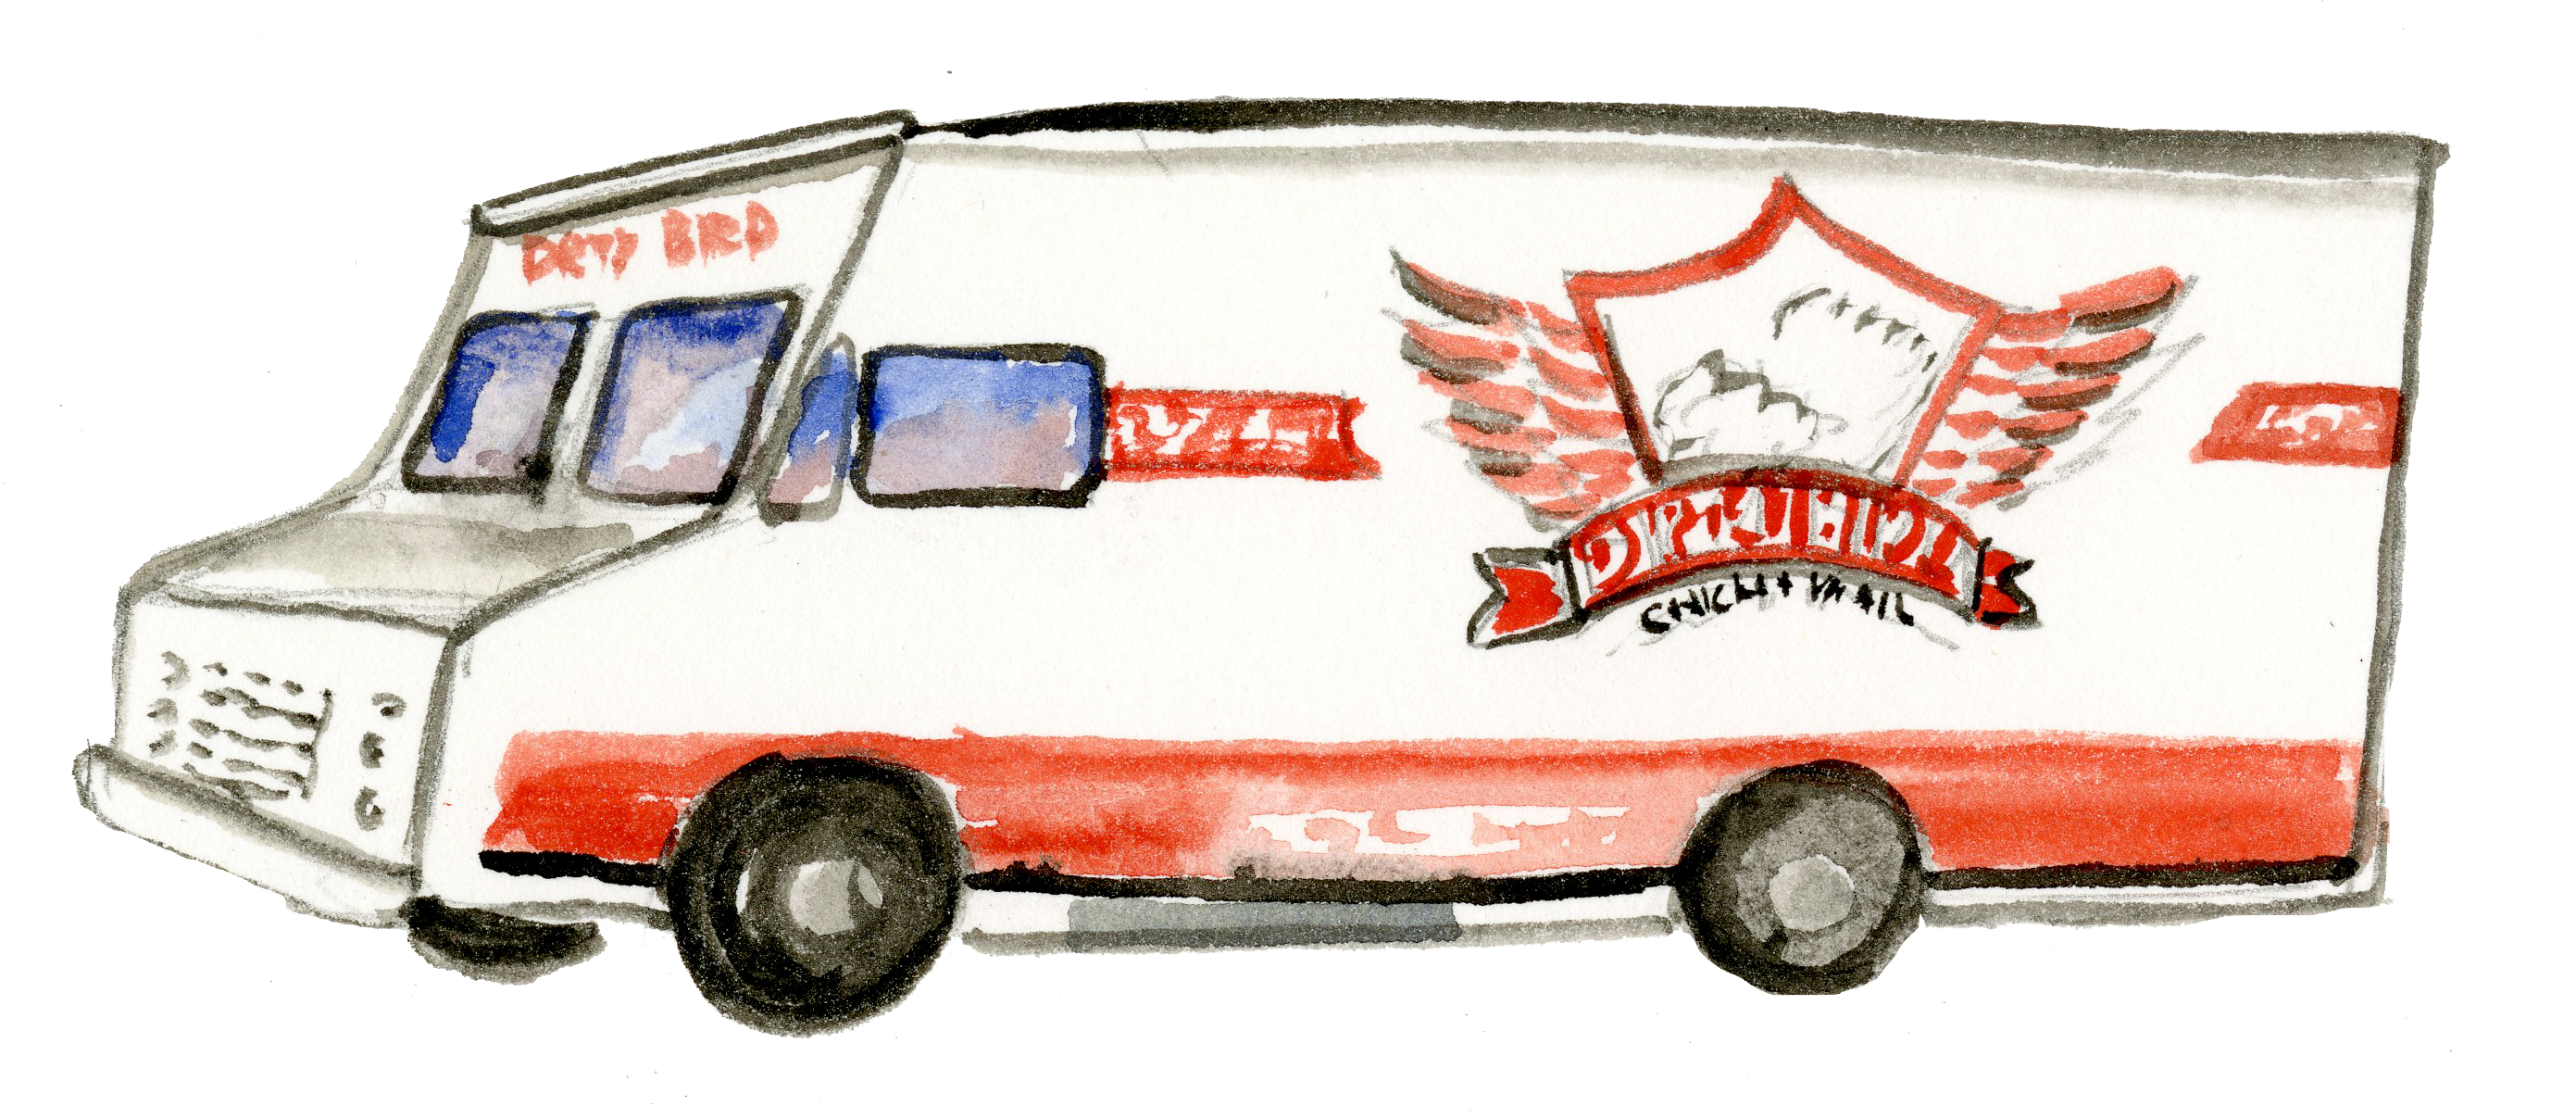 Dirty Bird Chicken And Waffles - Food Truck (2782x1207)